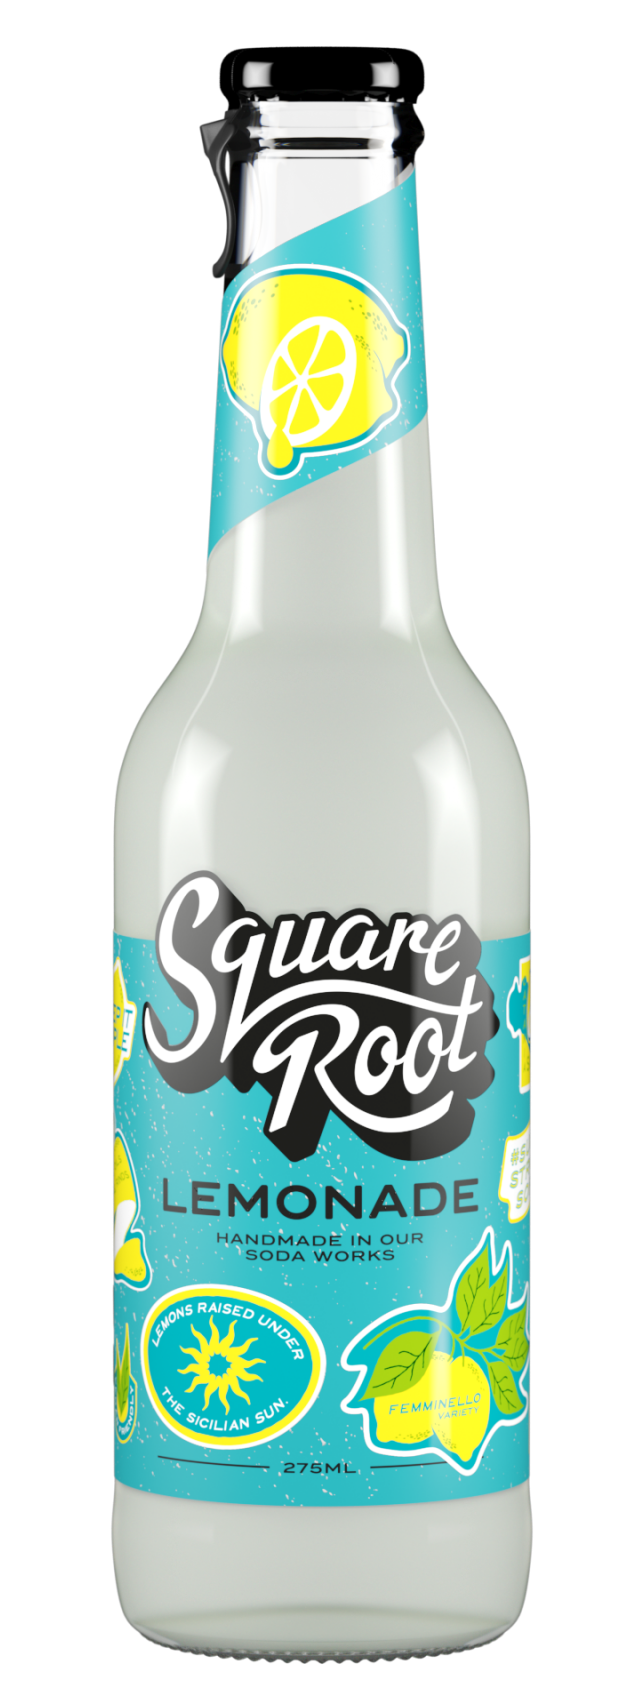 ALL THINGS DRINKS - Square Root Lemonade